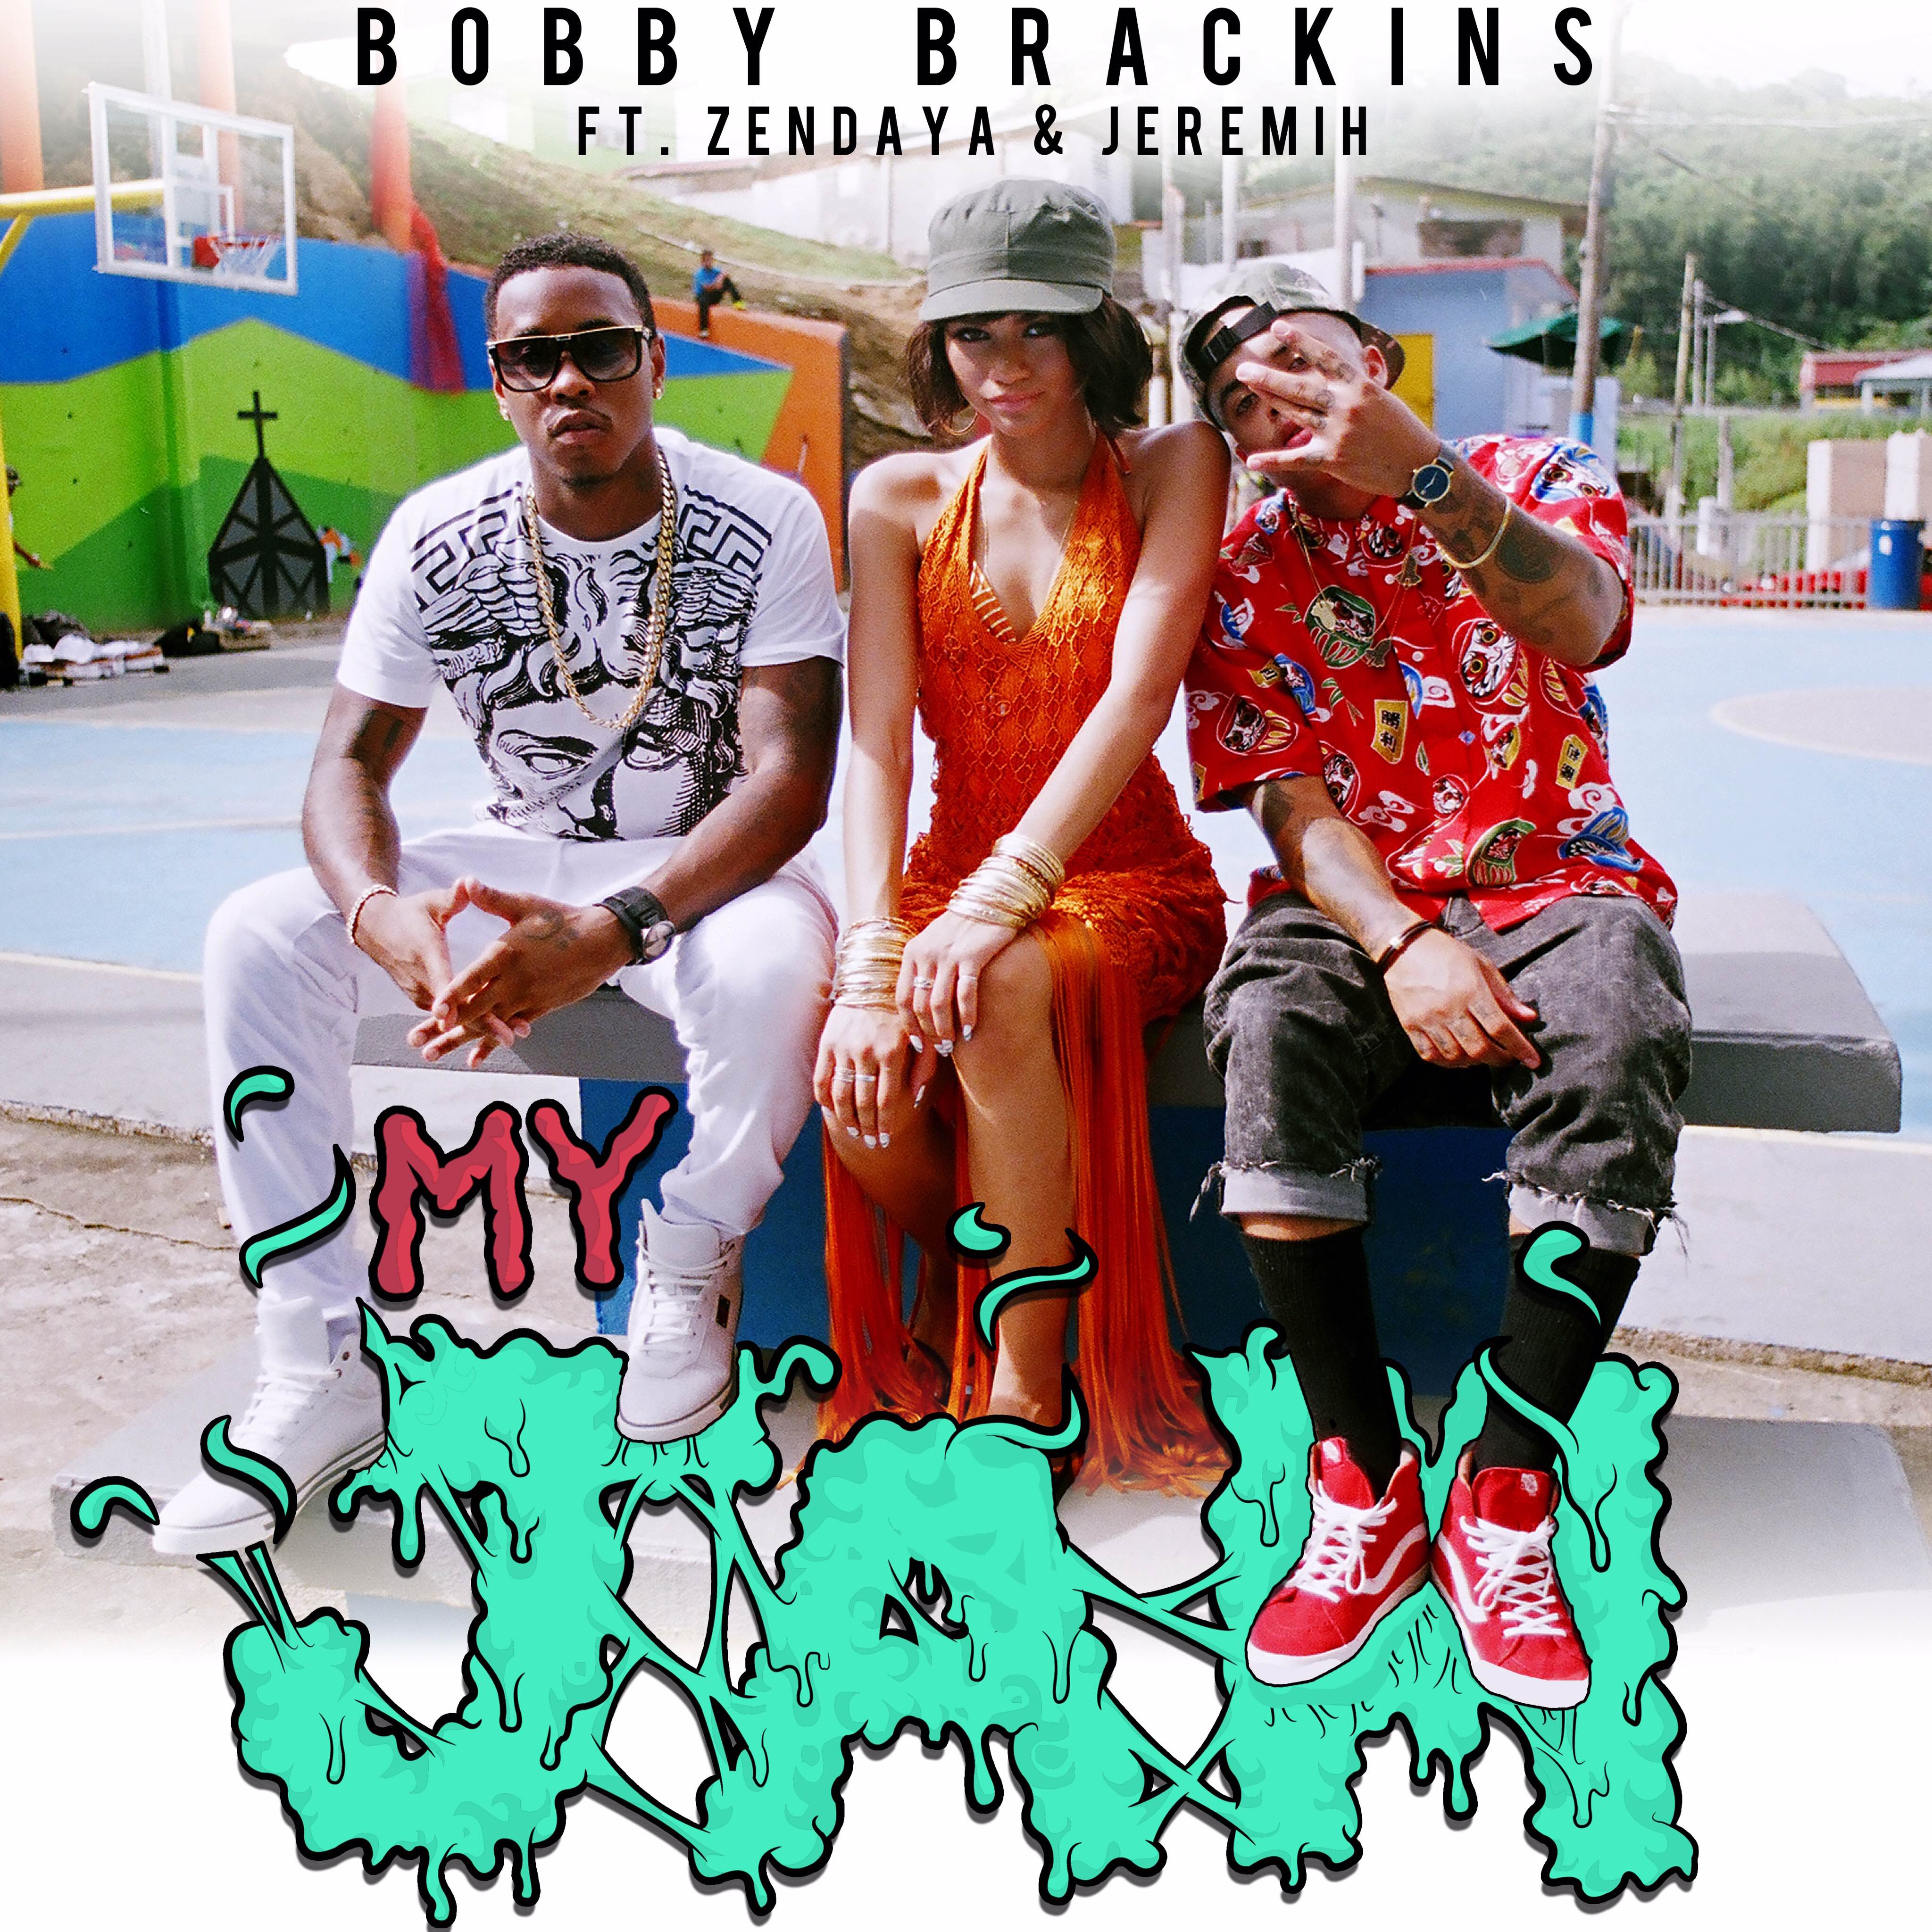 Bobby Brackins ft. Zendaya & Jeremih – “My Jam” (Audio)